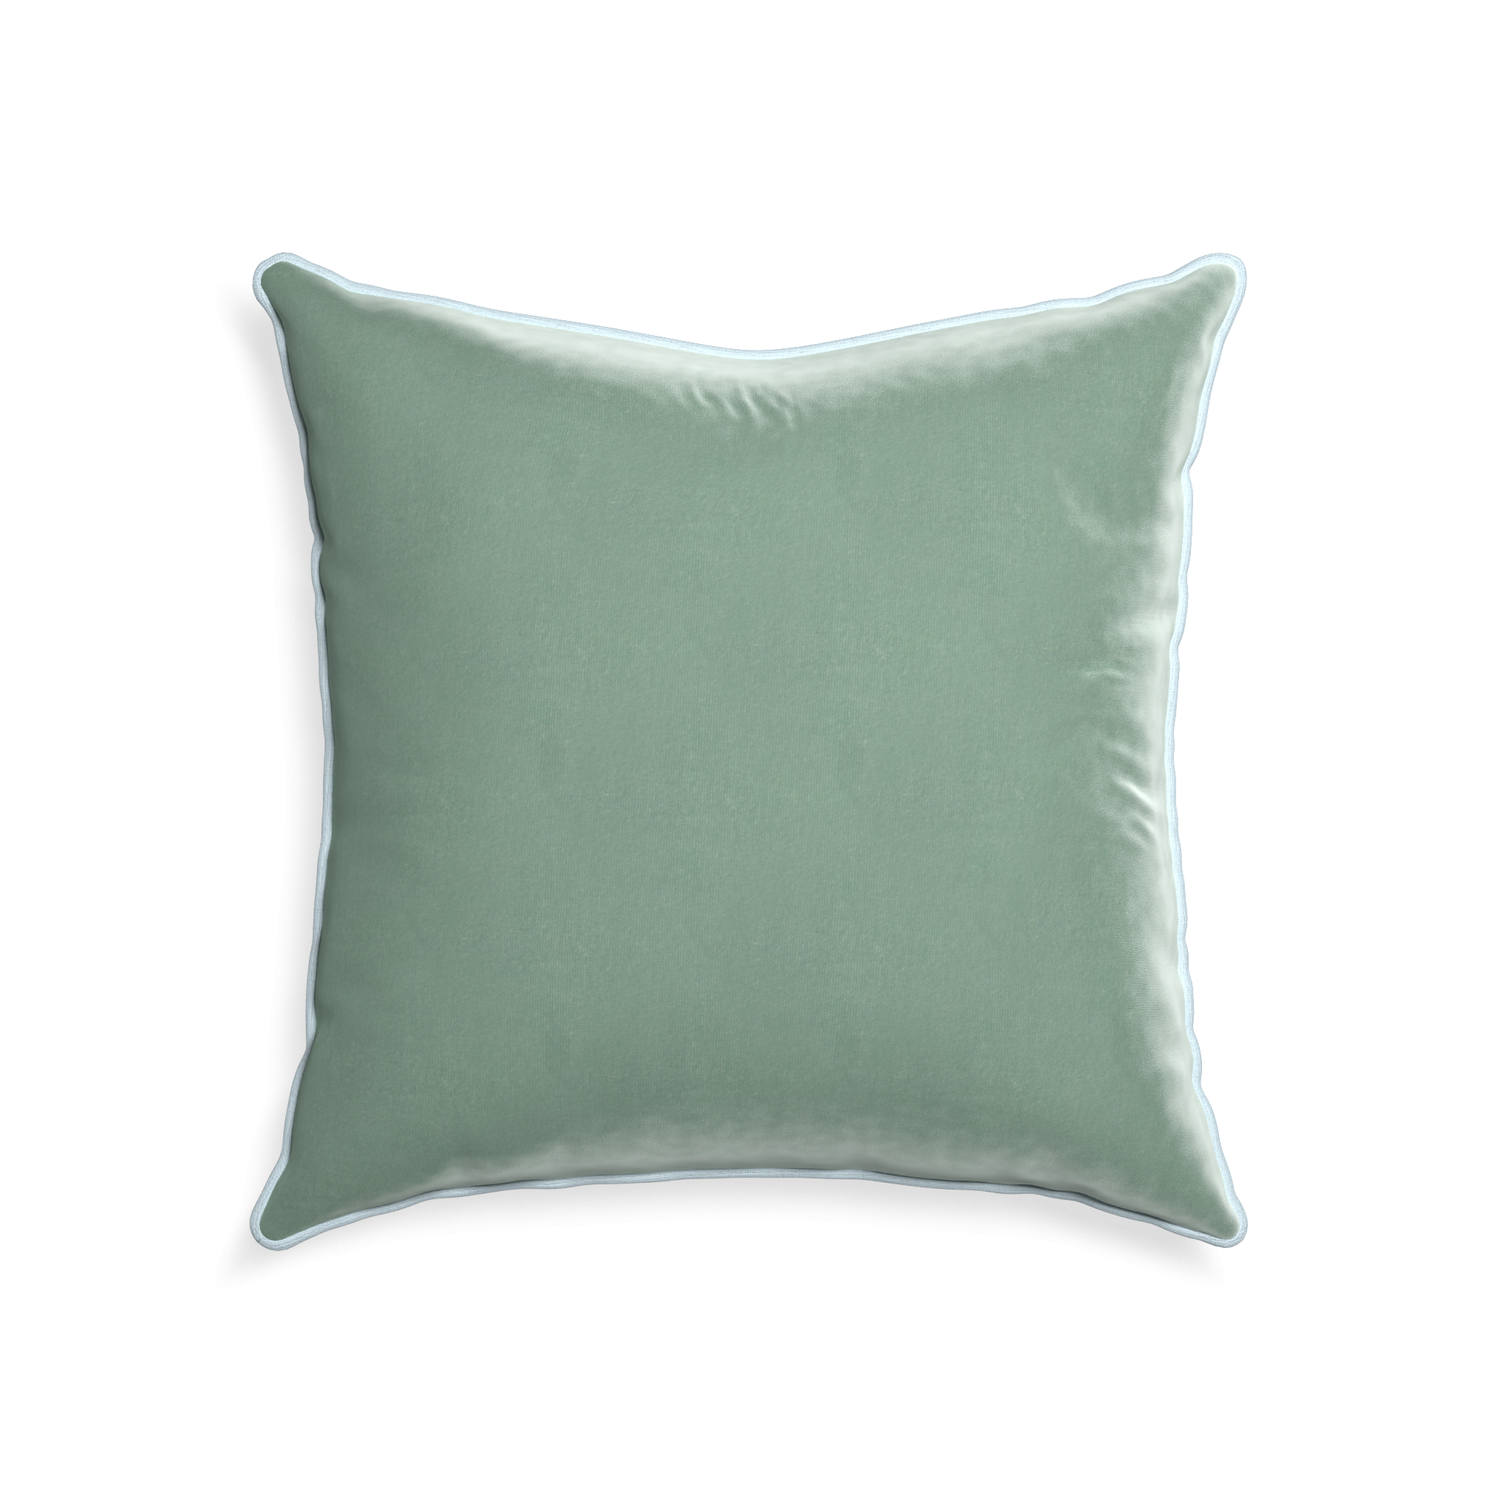 square blue green velvet pillow with light blue piping